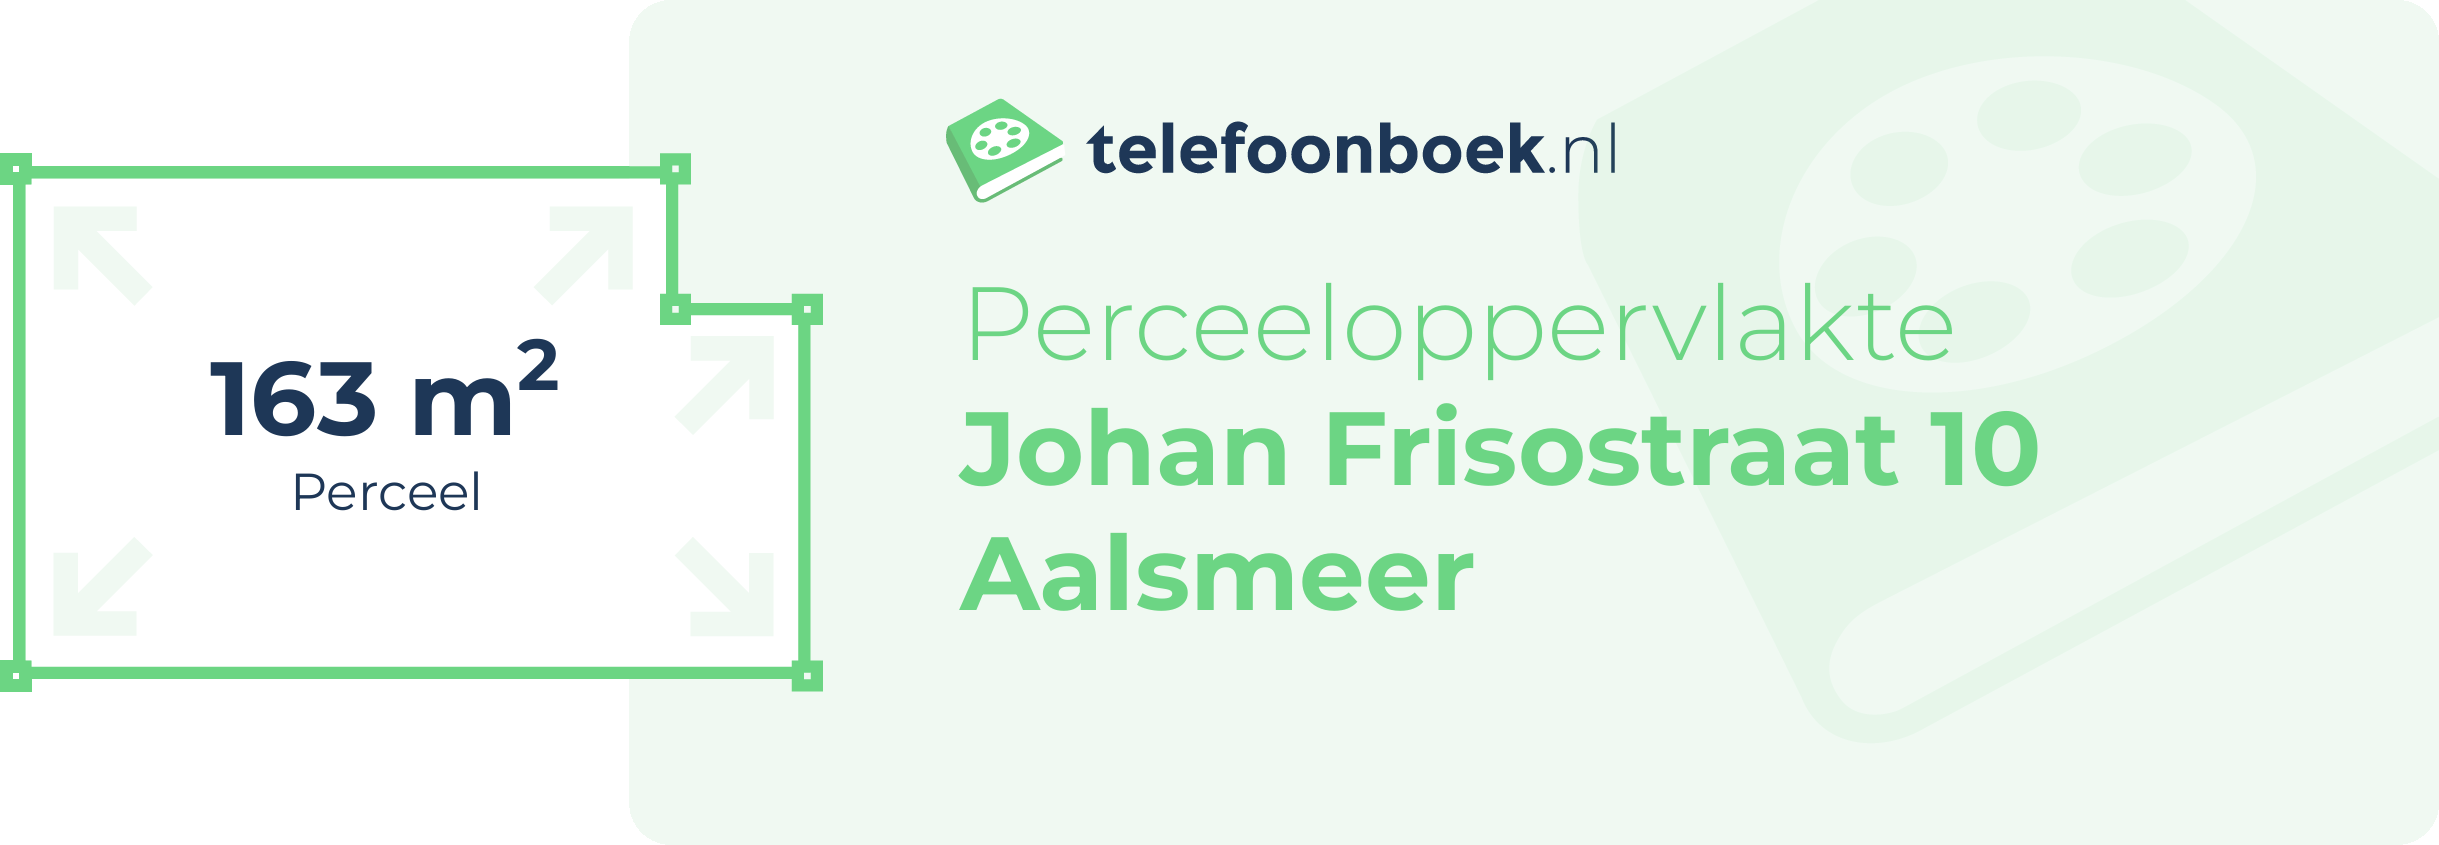 Perceeloppervlakte Johan Frisostraat 10 Aalsmeer